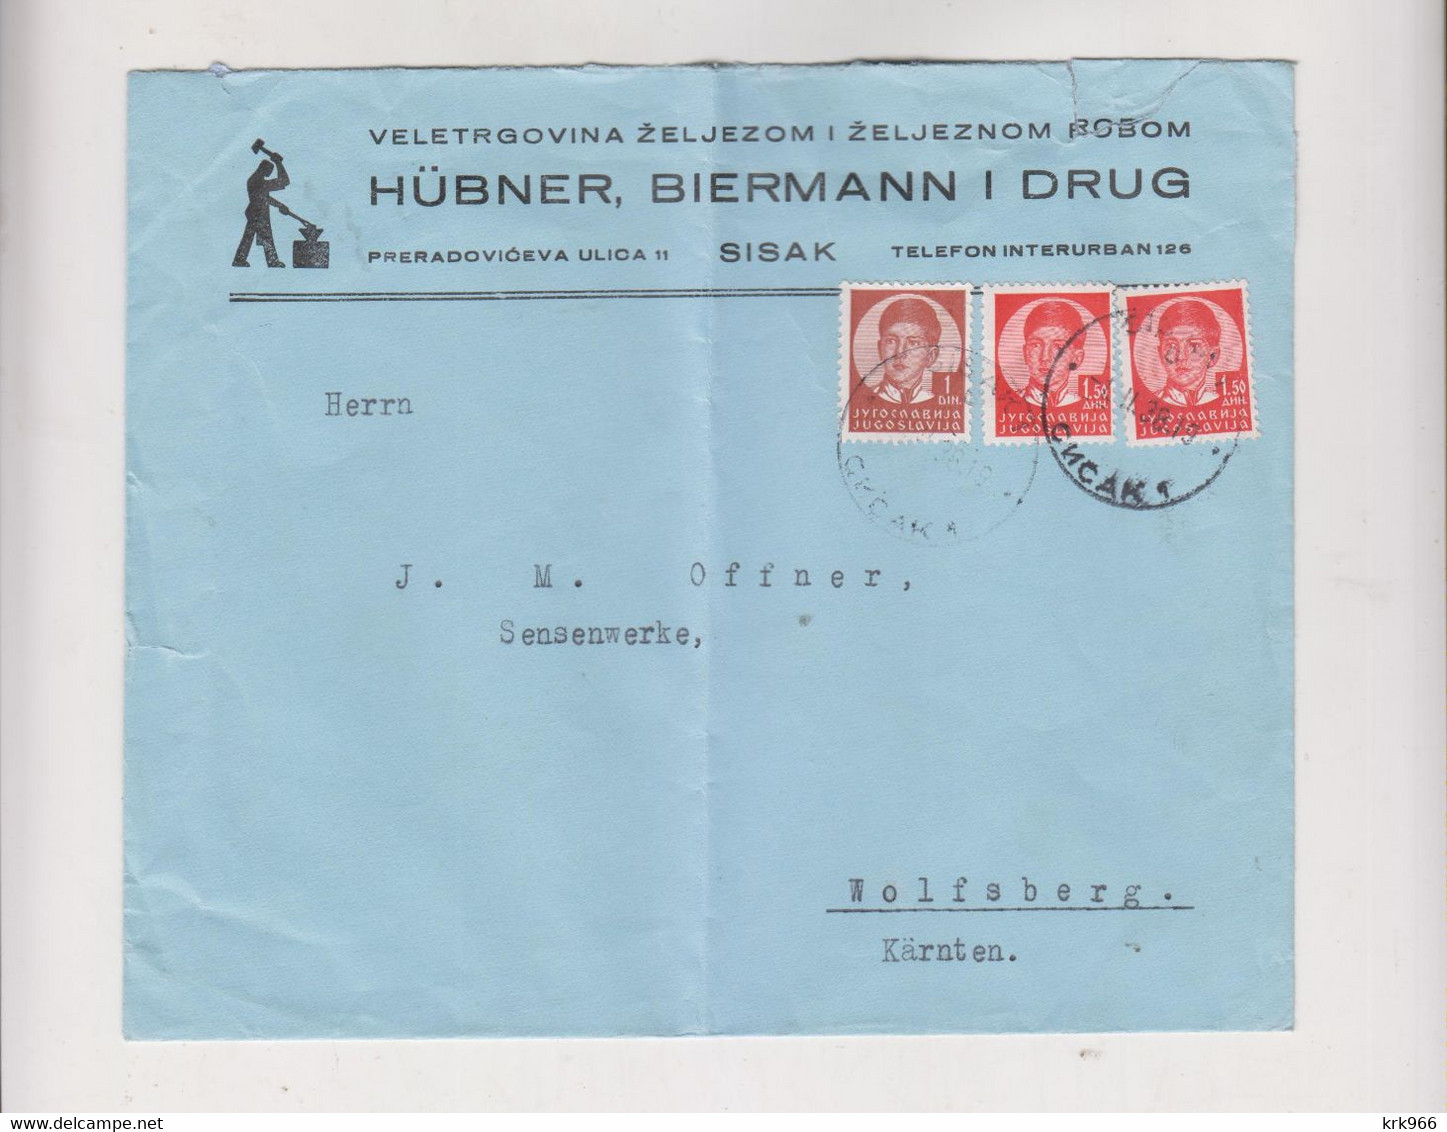 YUGOSLAVIA,1938 SISAK  Nice Firm Cover HUBNER, BIERMANN I DRUG - Briefe U. Dokumente